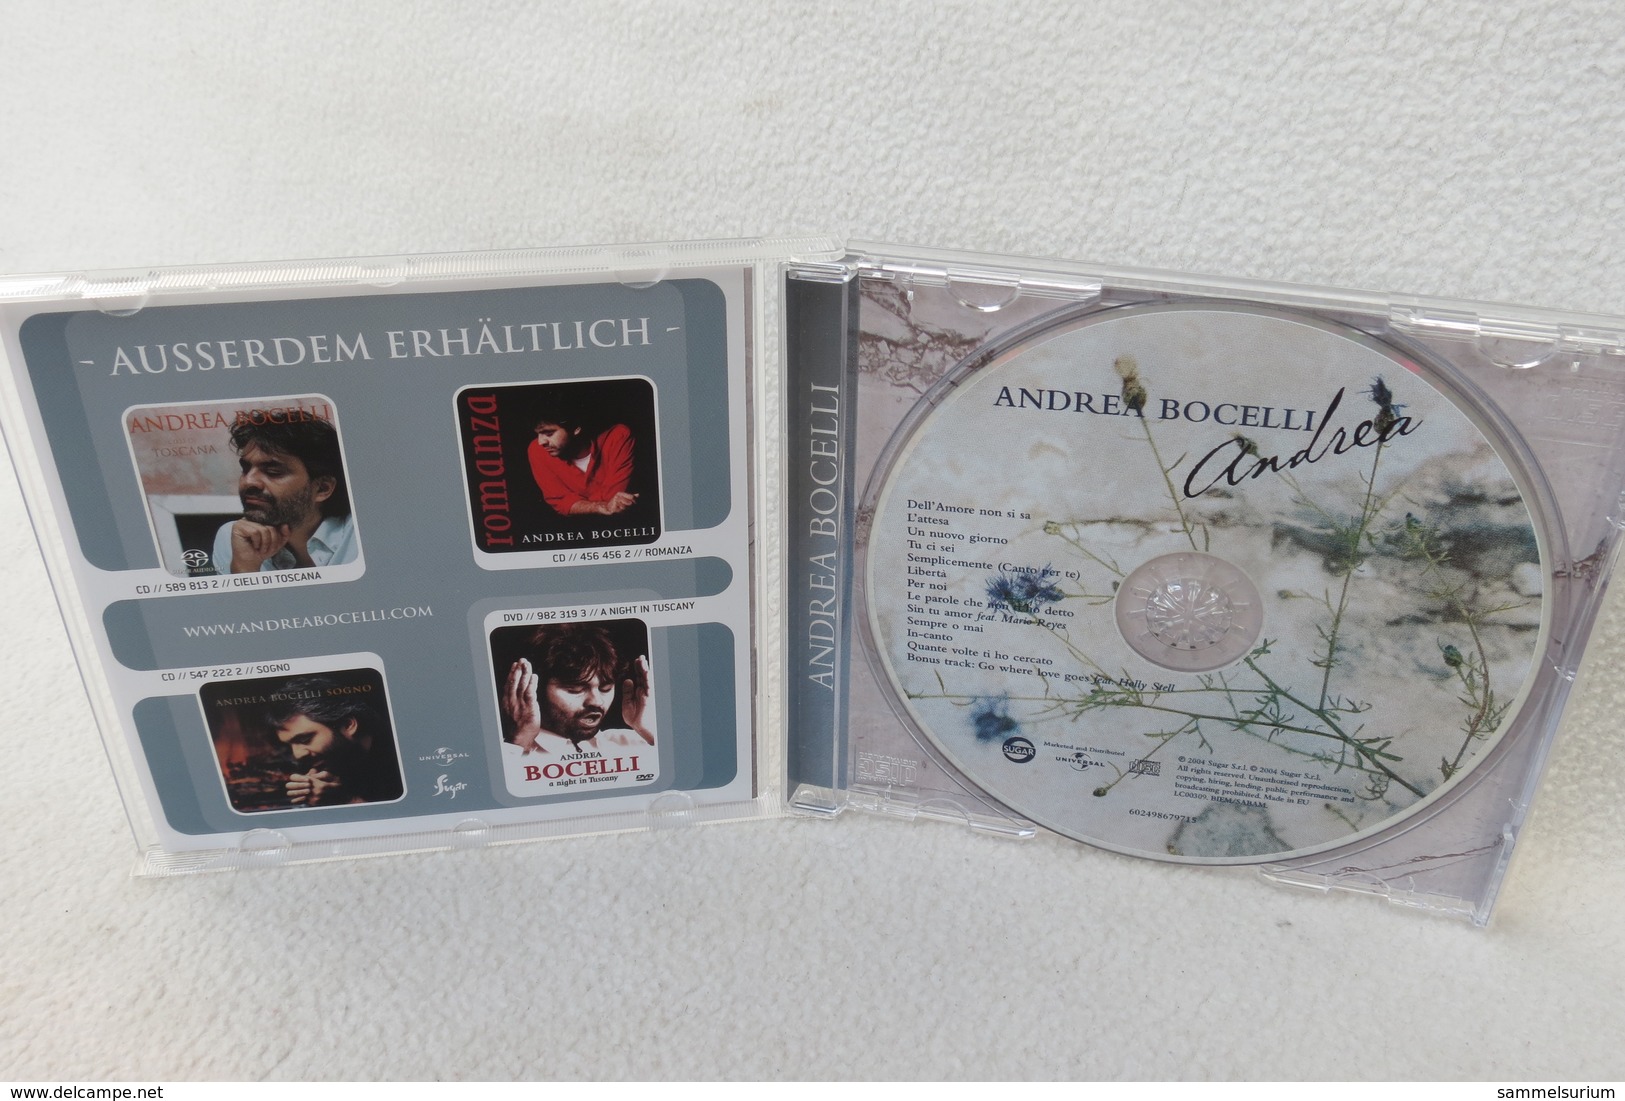 CD "Andrea Bocelli" Andrea - Sonstige - Italienische Musik